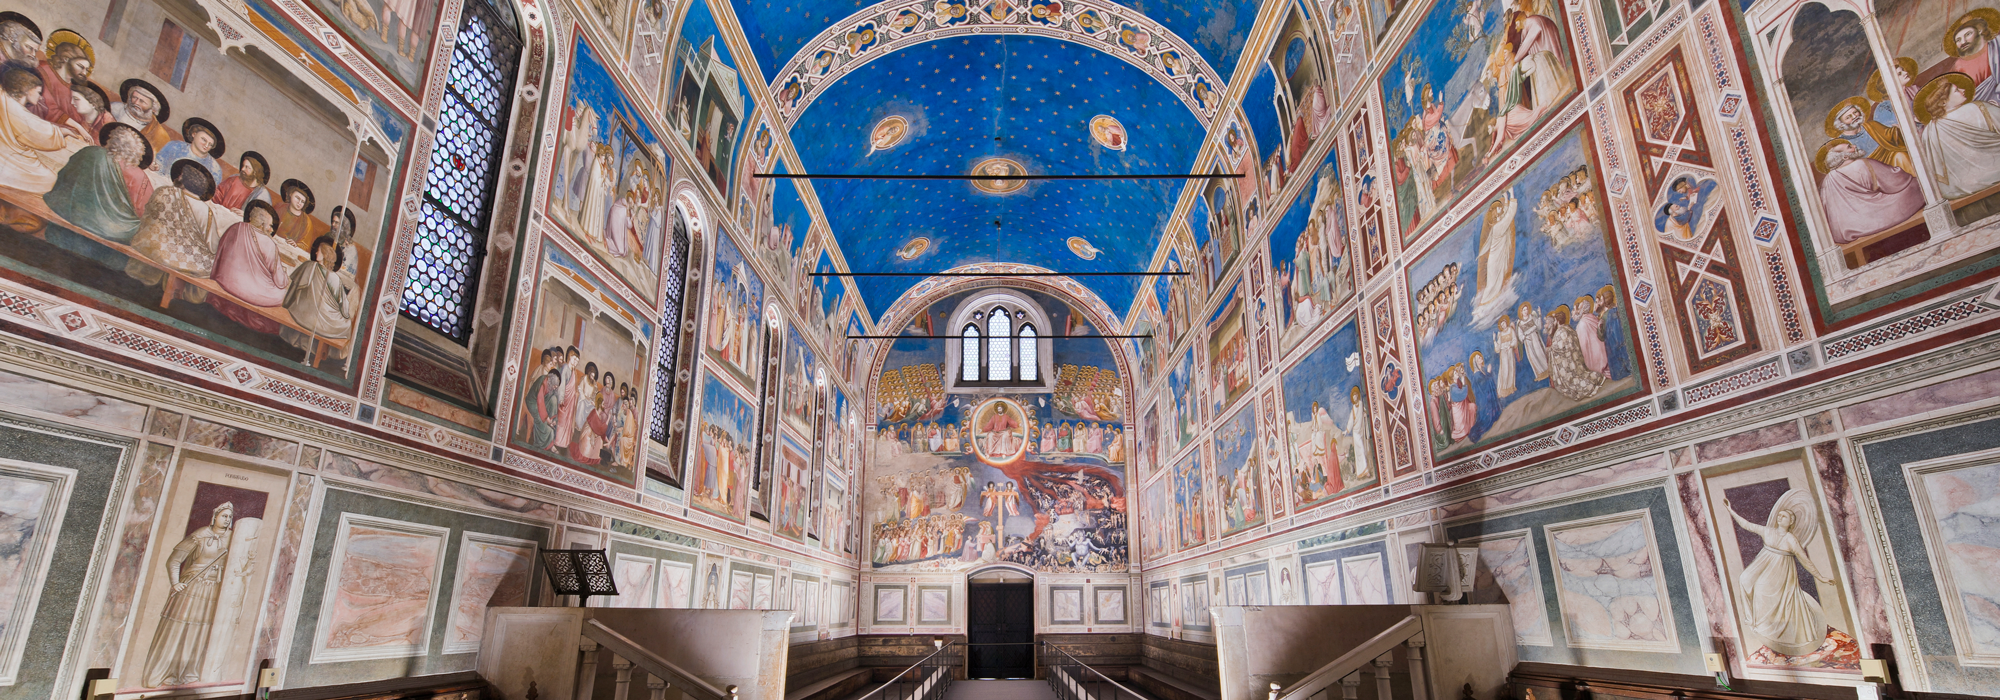 The Scrovegni Chapel - Padua, Italy